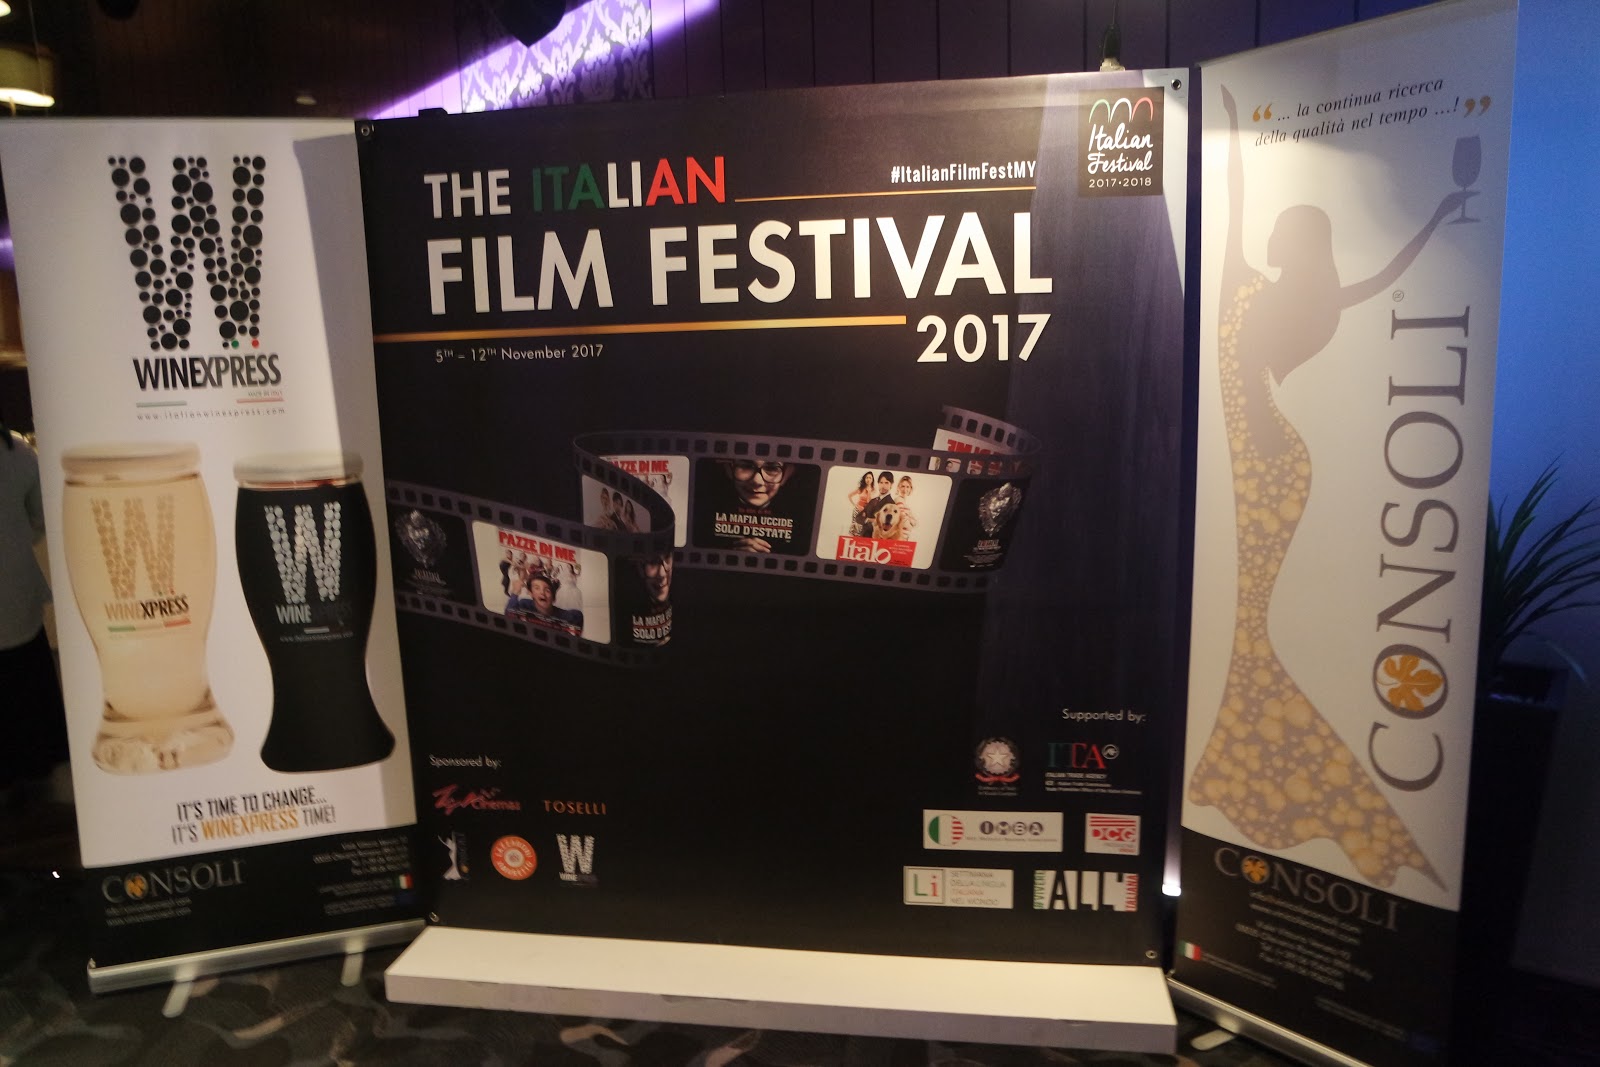 ITALIAN FILM FESTIVAL 2017